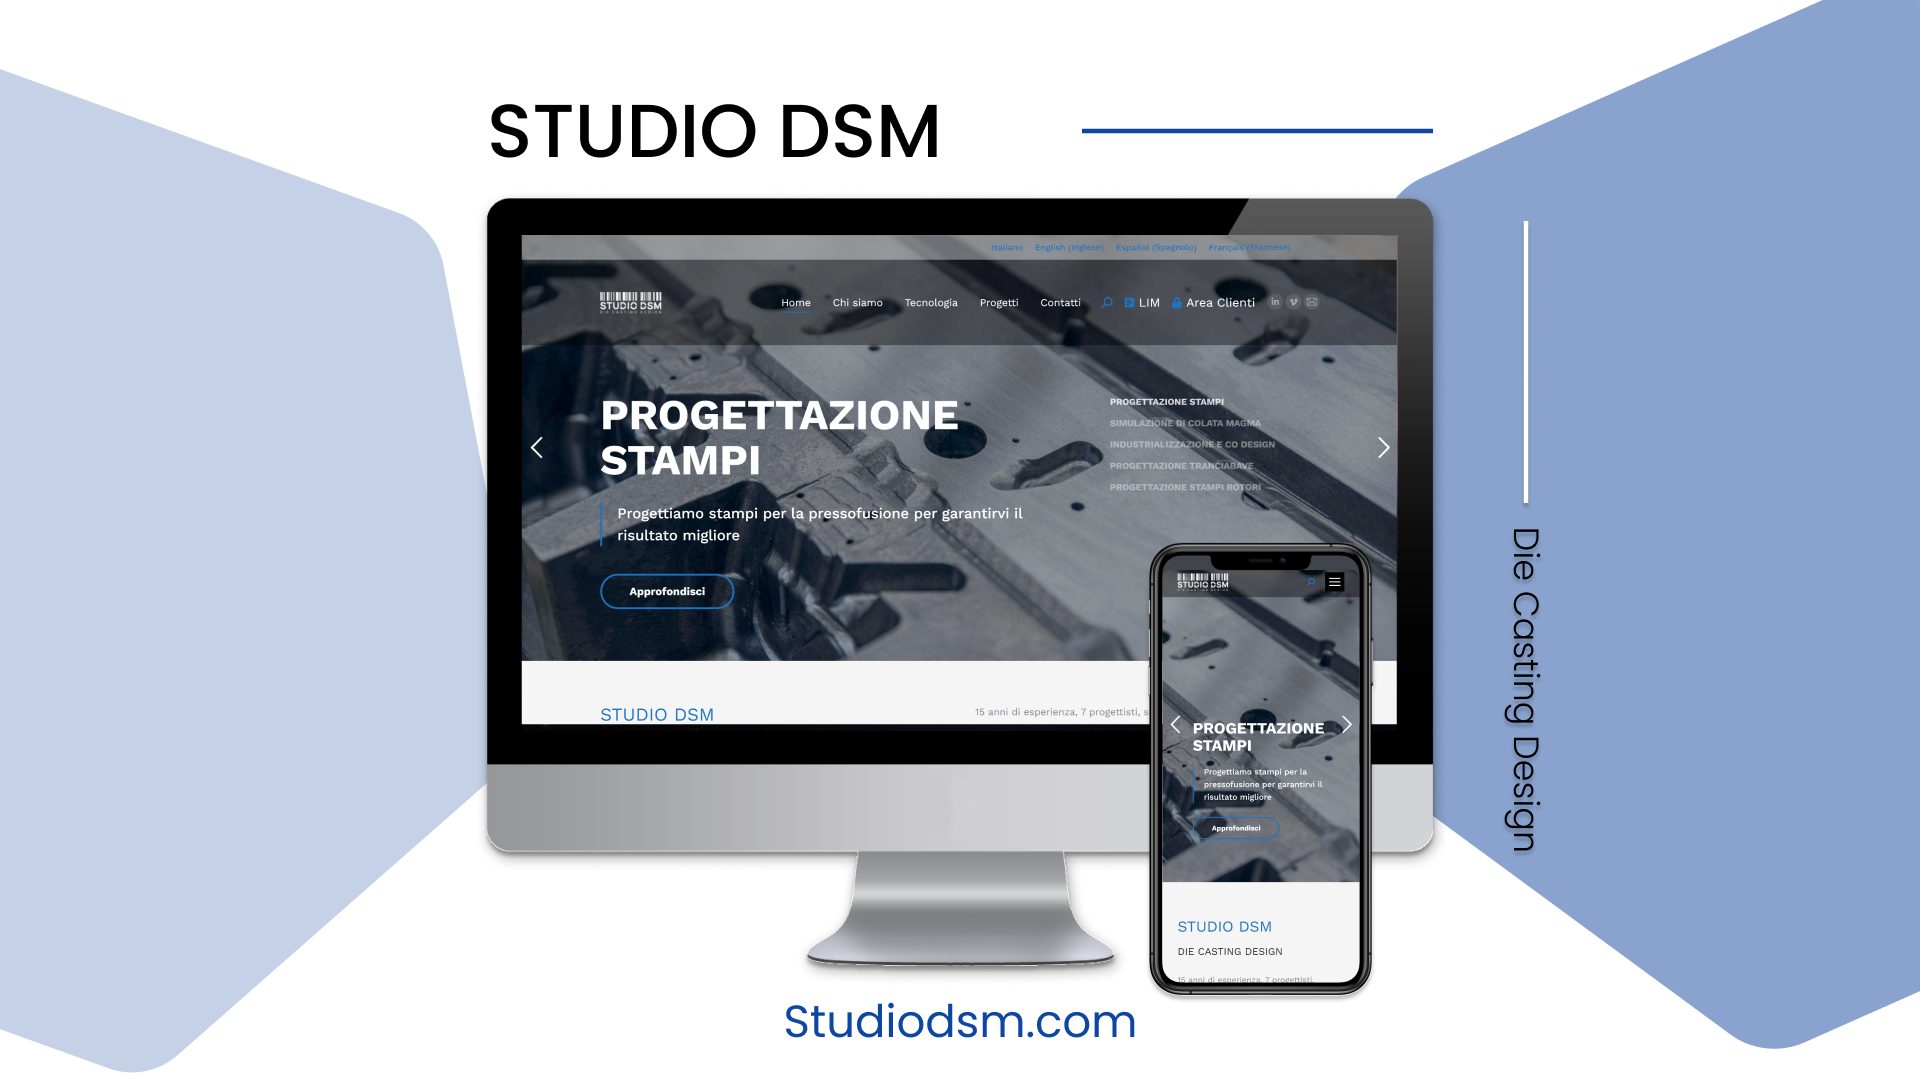 Studio DSM